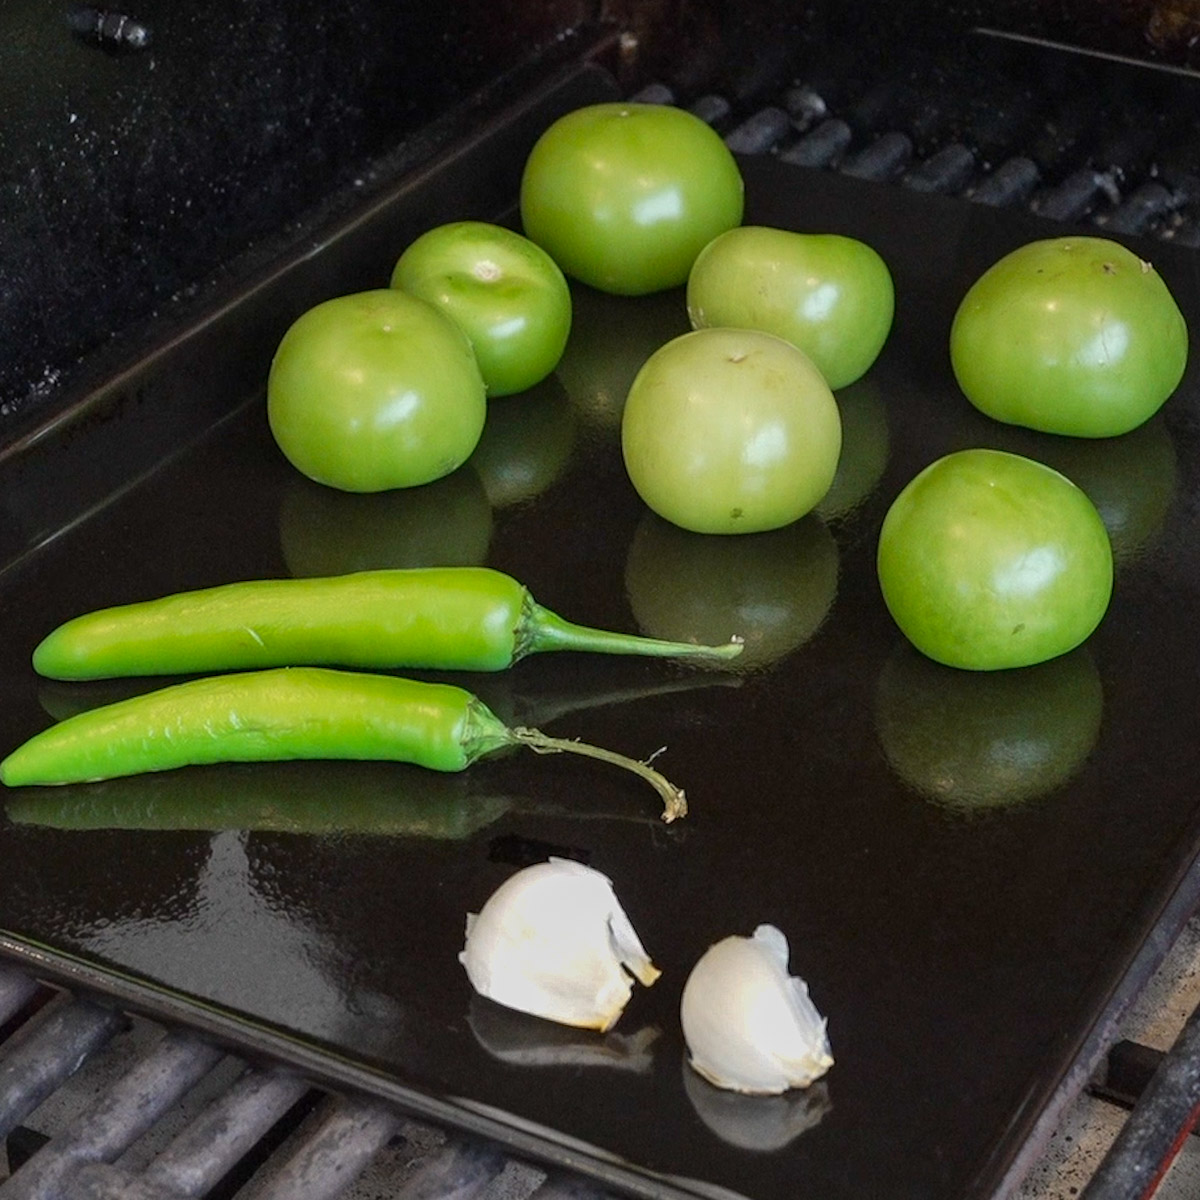 Roast the vegetables until slightly charred.